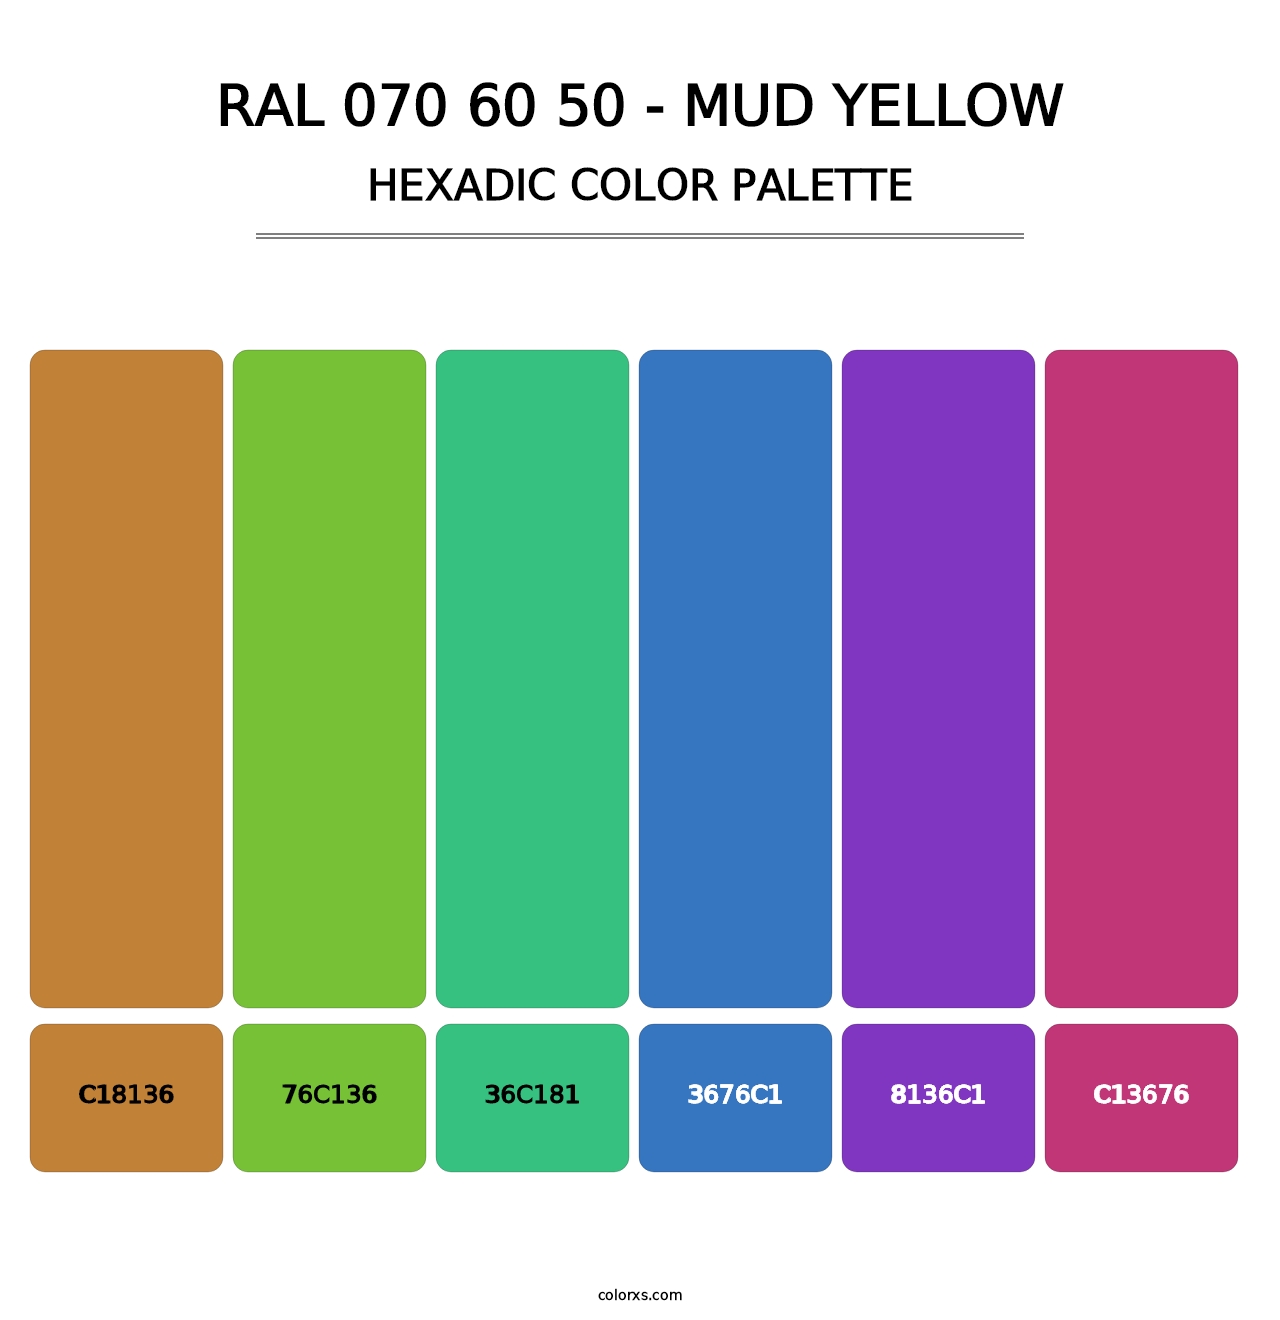 RAL 070 60 50 - Mud Yellow - Hexadic Color Palette